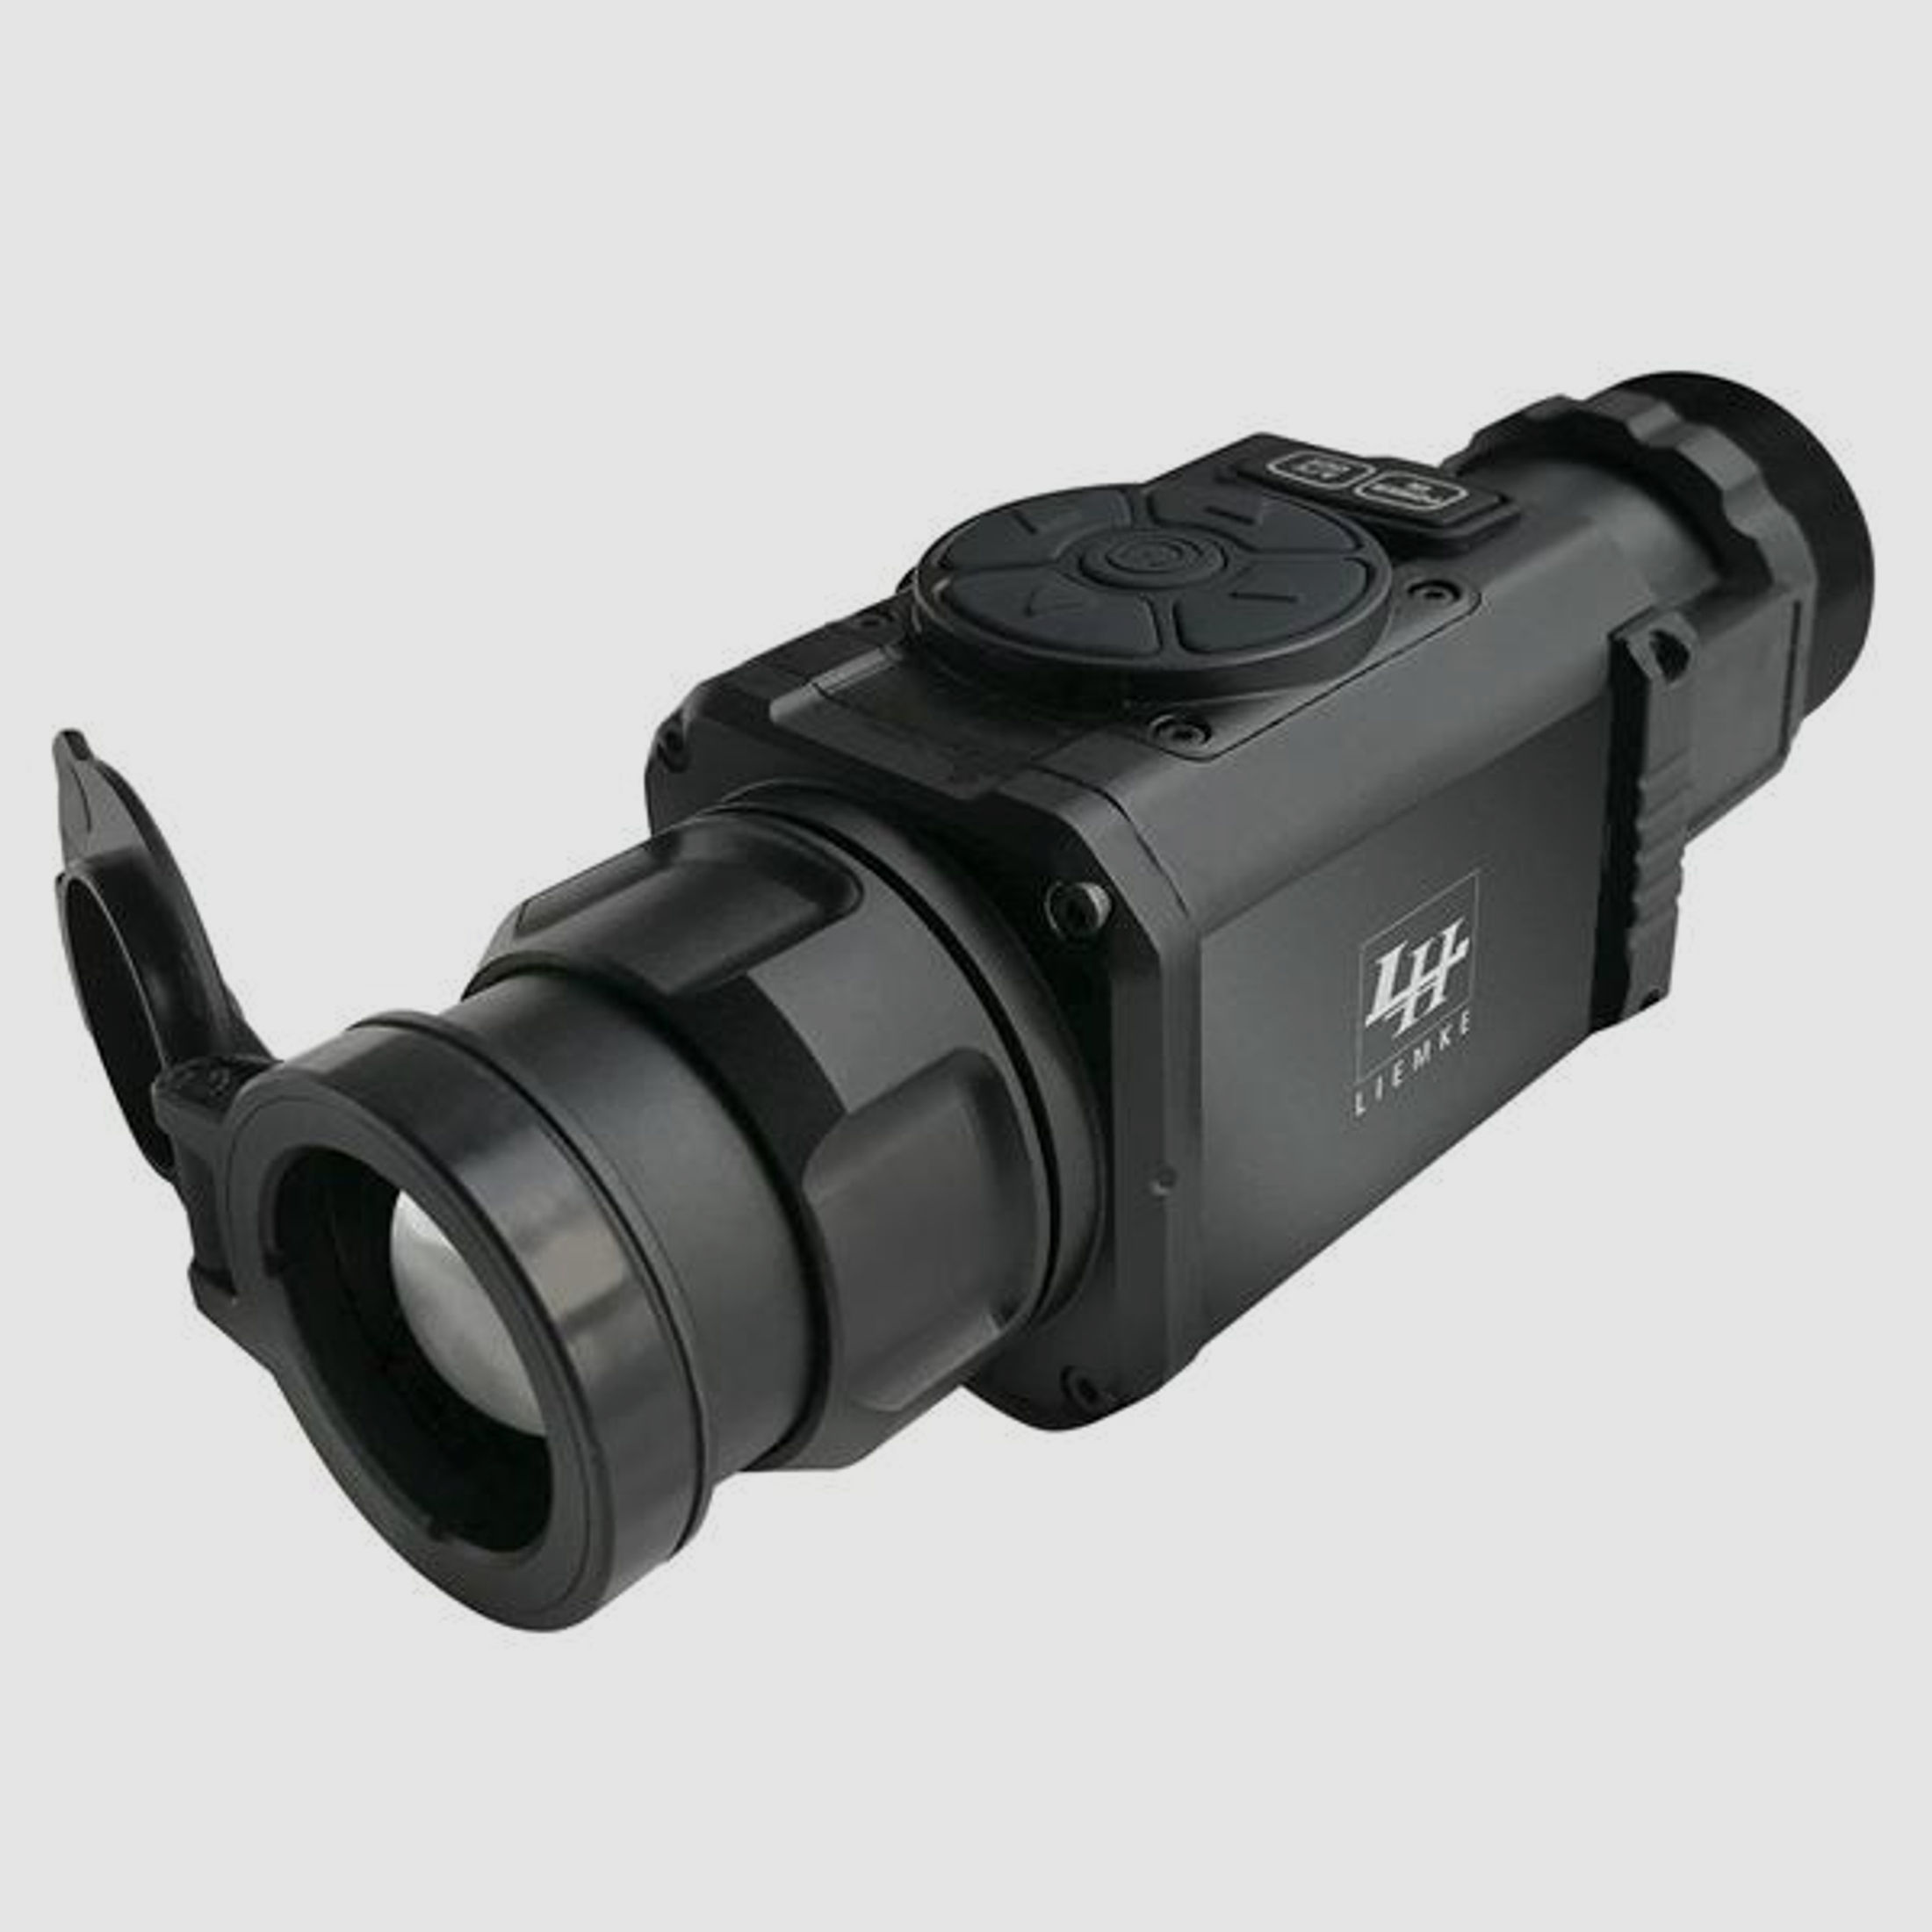 LIEMKE Optik Wärmebild-Kamera Merlin 35 (2020) Dual-Use - Vorsatzgerät